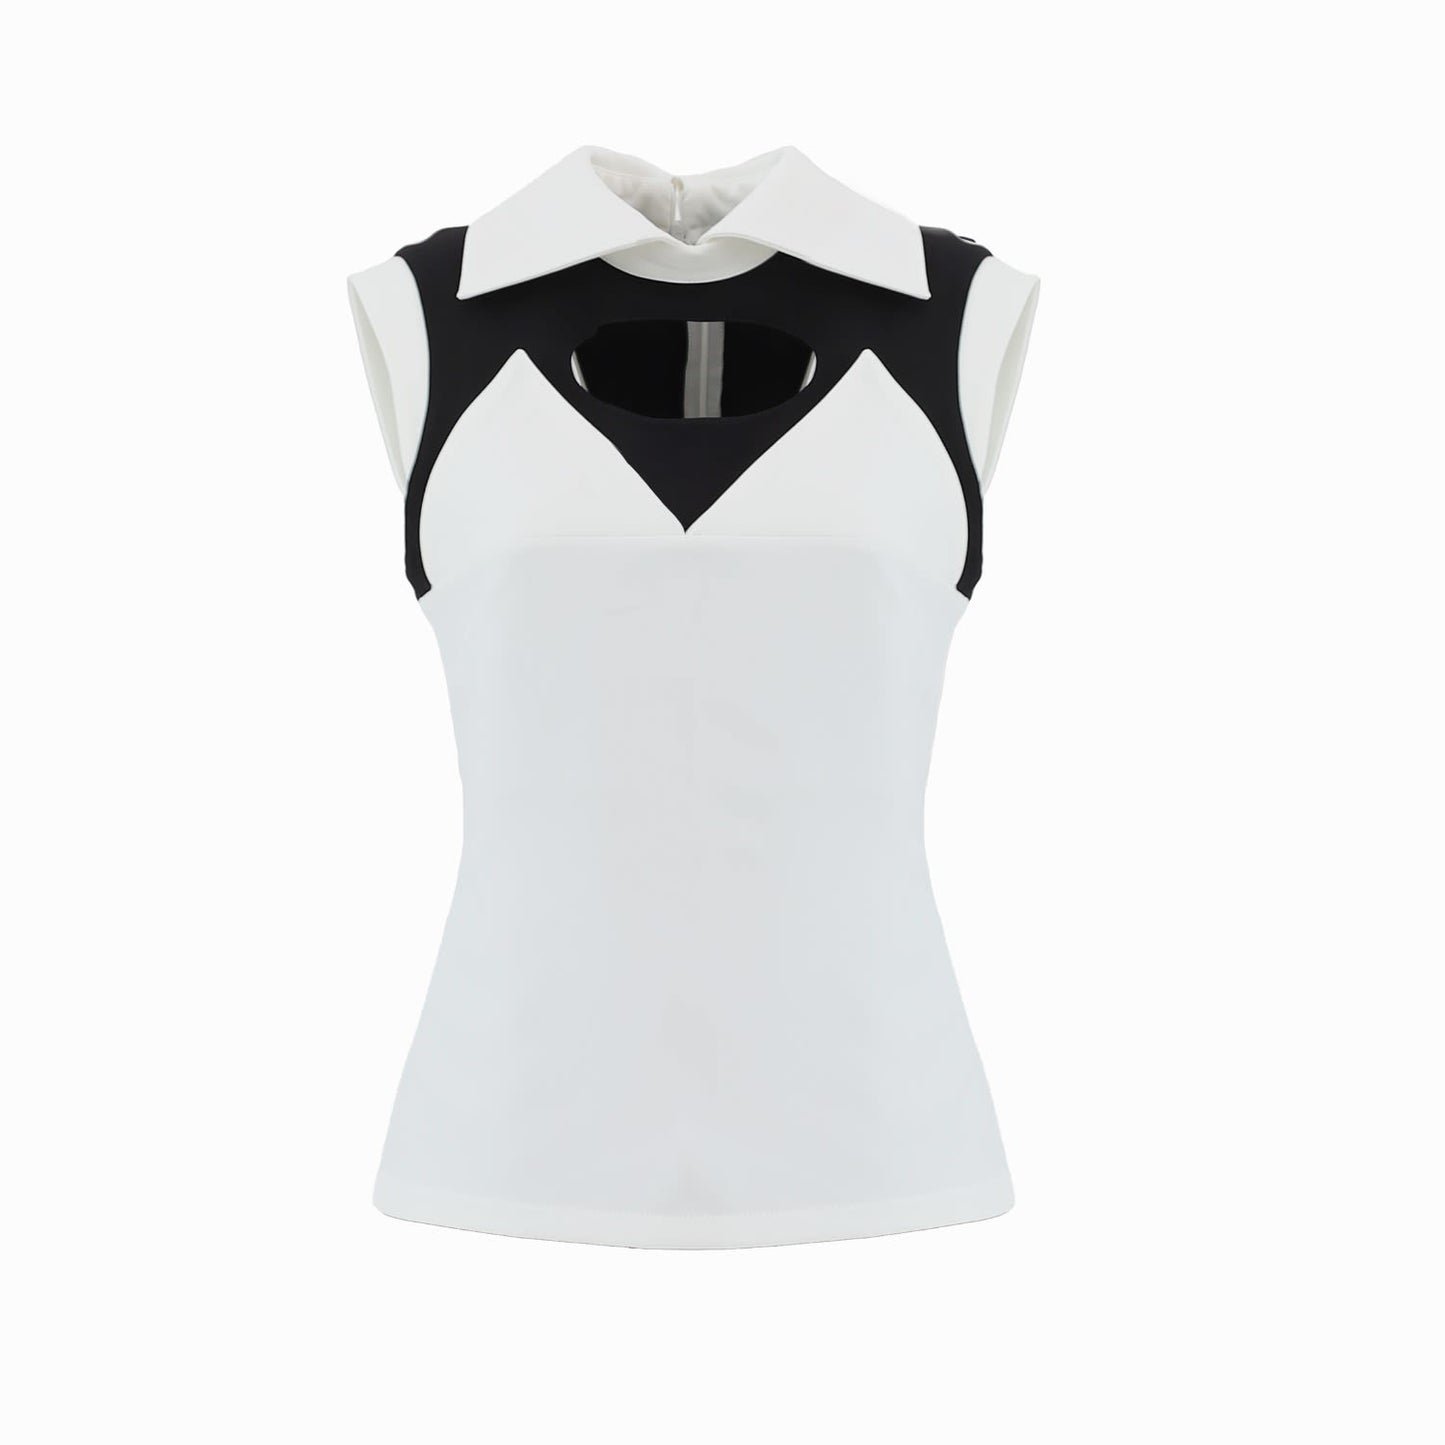 Thin Strap Midi Dress X Sleeveless Blouse Black White Suit